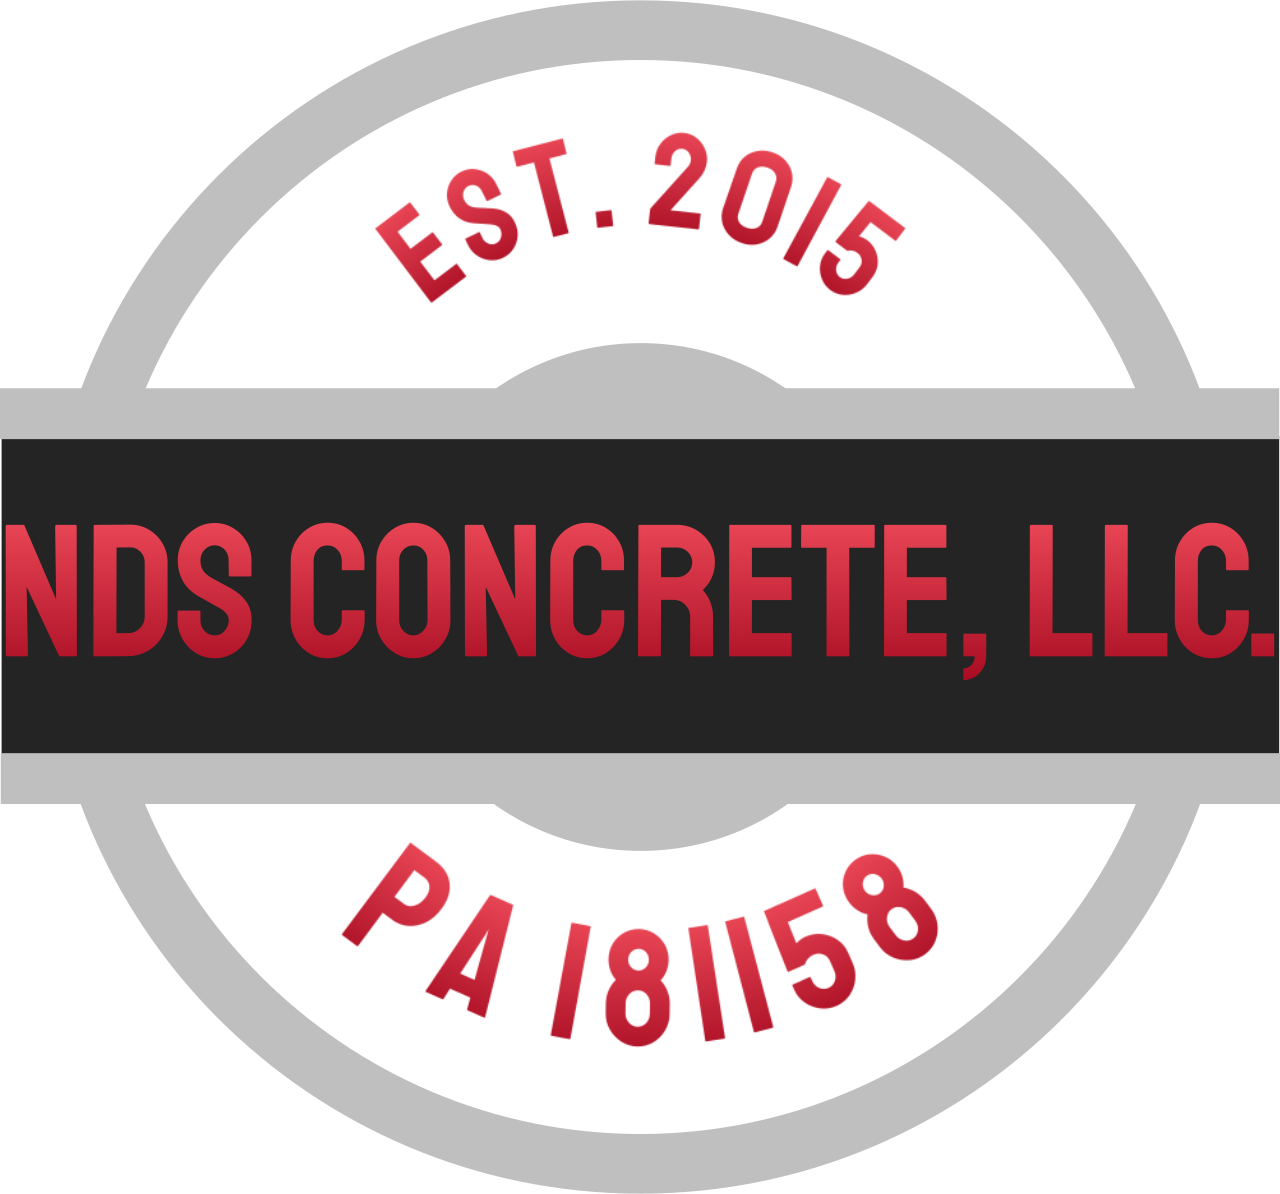 NDS Concrete, LLC.'s logo